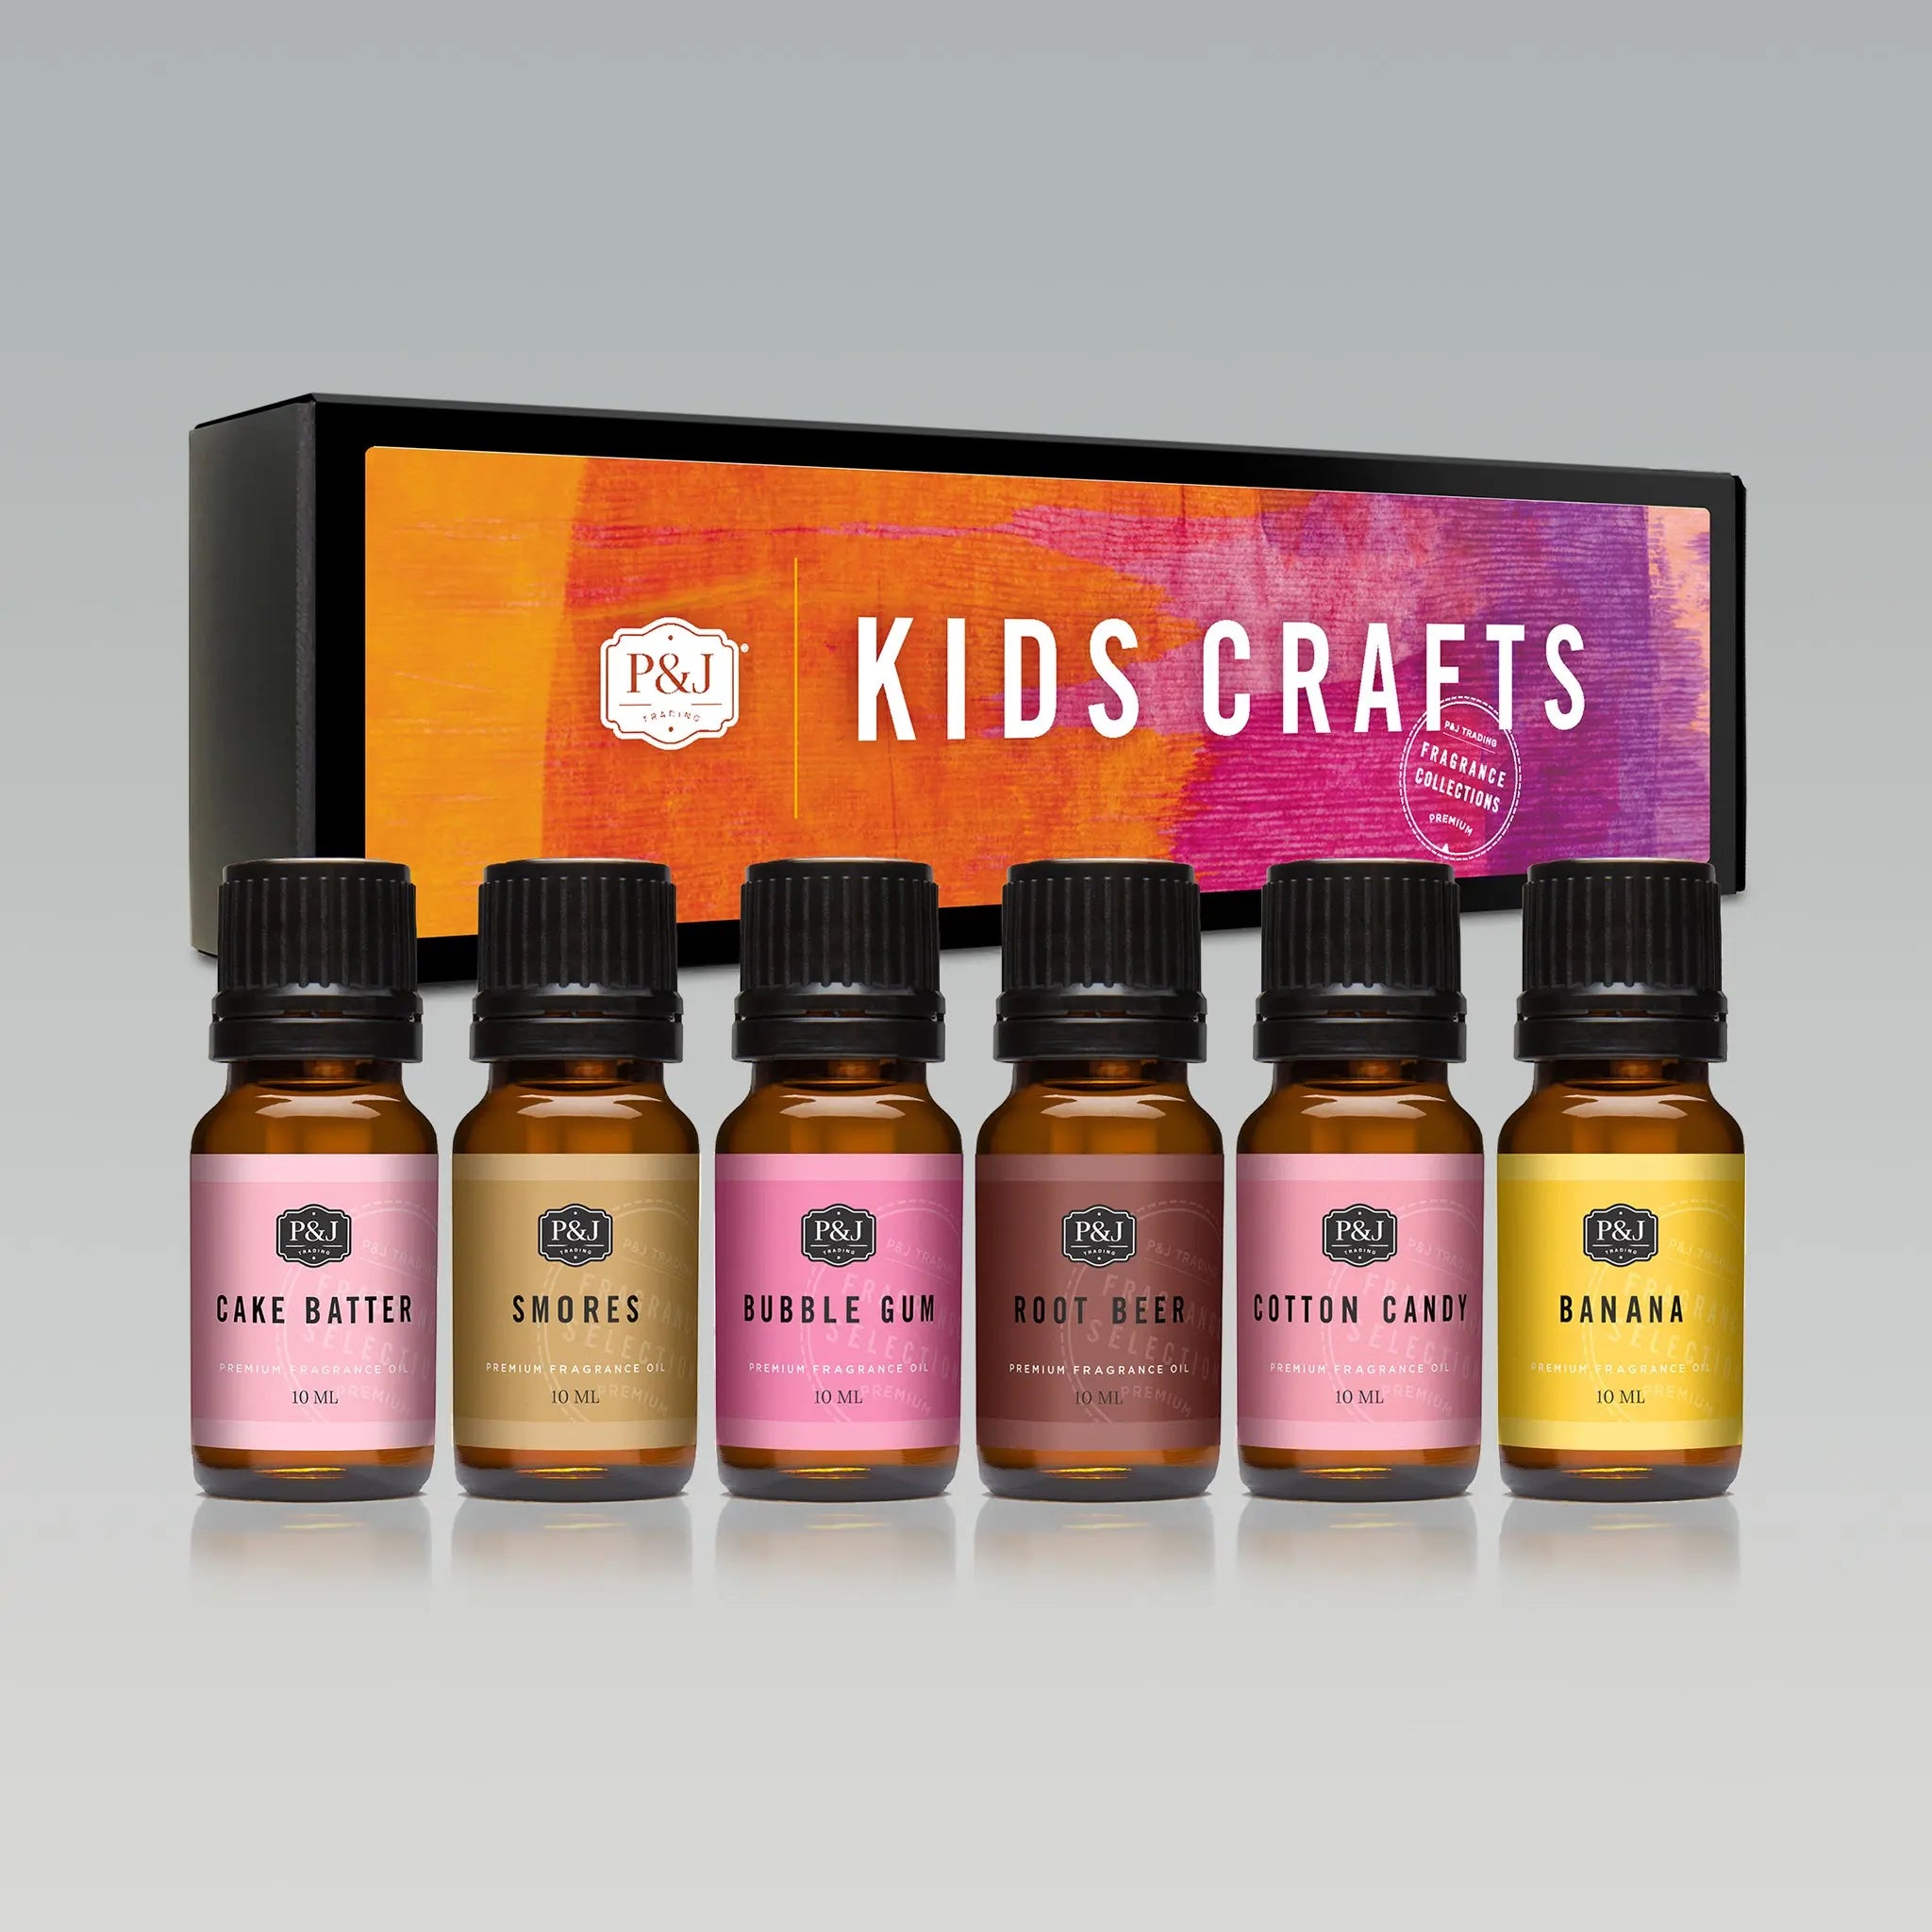 P&J Kids Crafts Set of 6 Premium Fragrance Oil for Candle Making